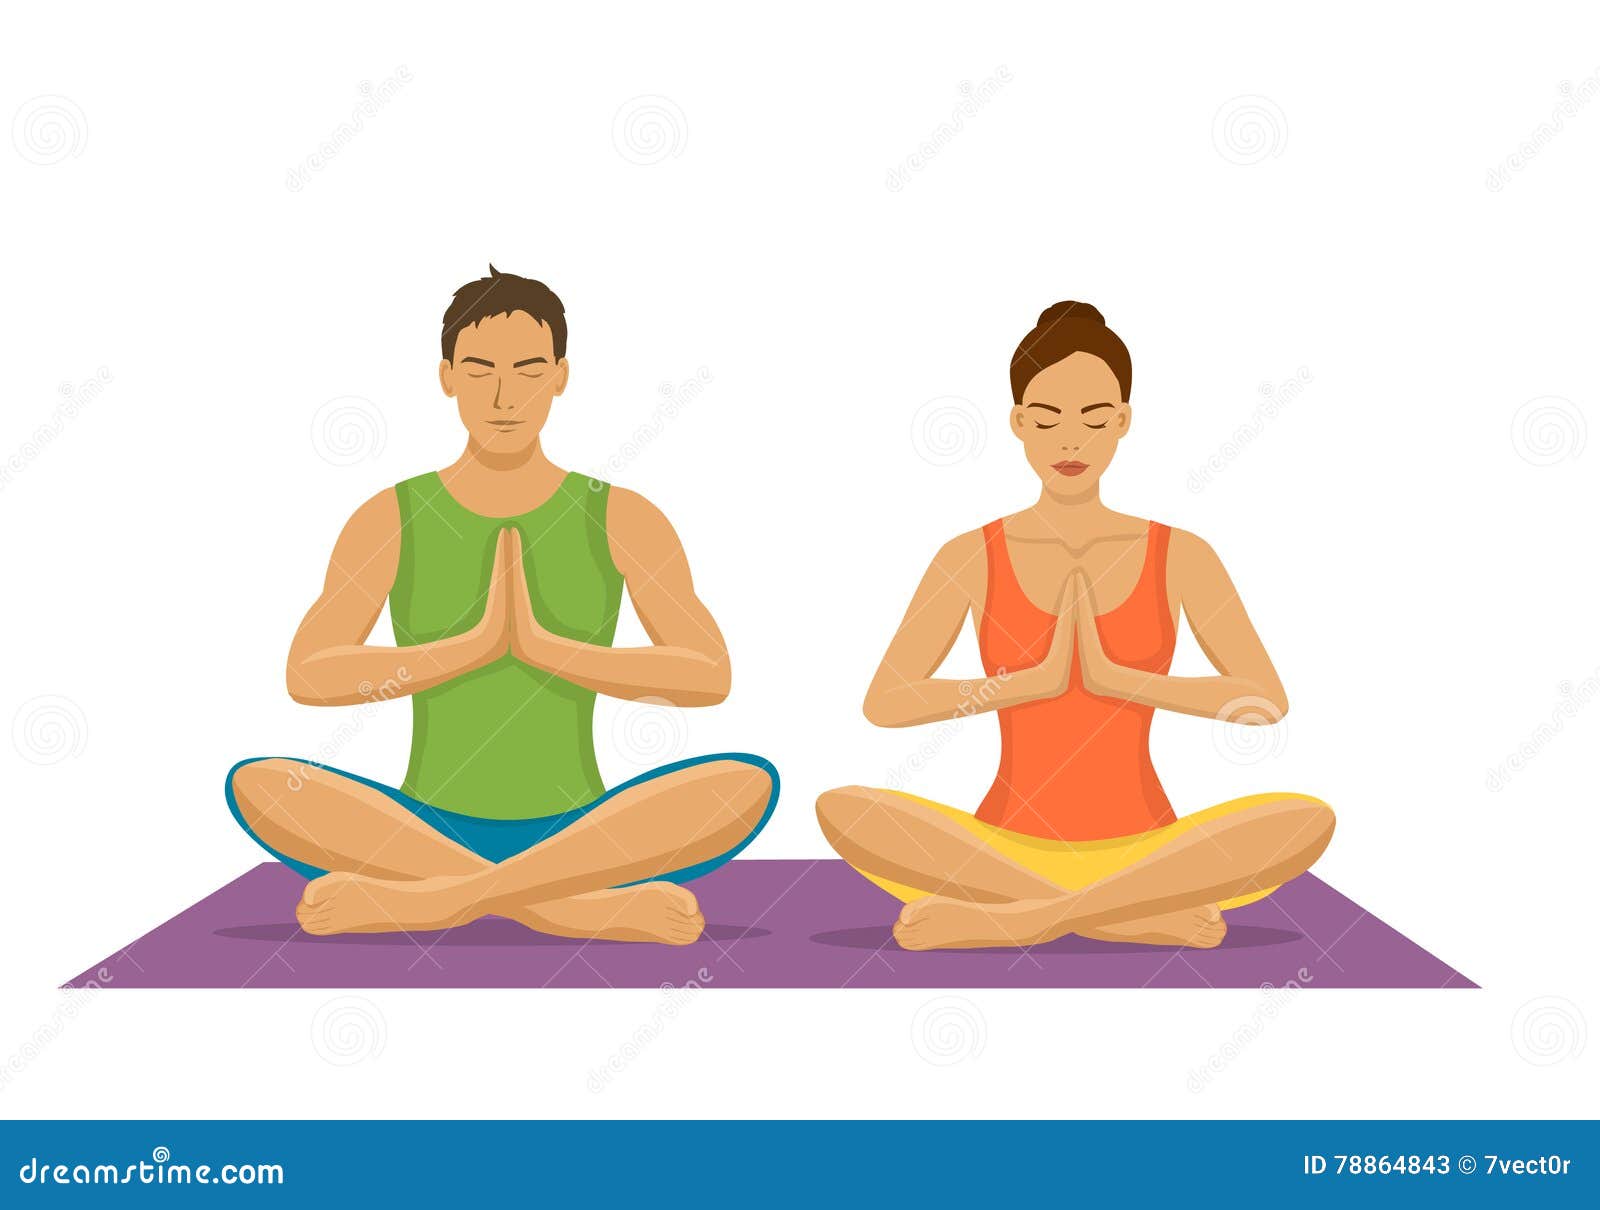 https://thumbs.dreamstime.com/z/couple-exercising-yoga-together-meditating-lotus-pose-partner-vector-illustration-78864843.jpg